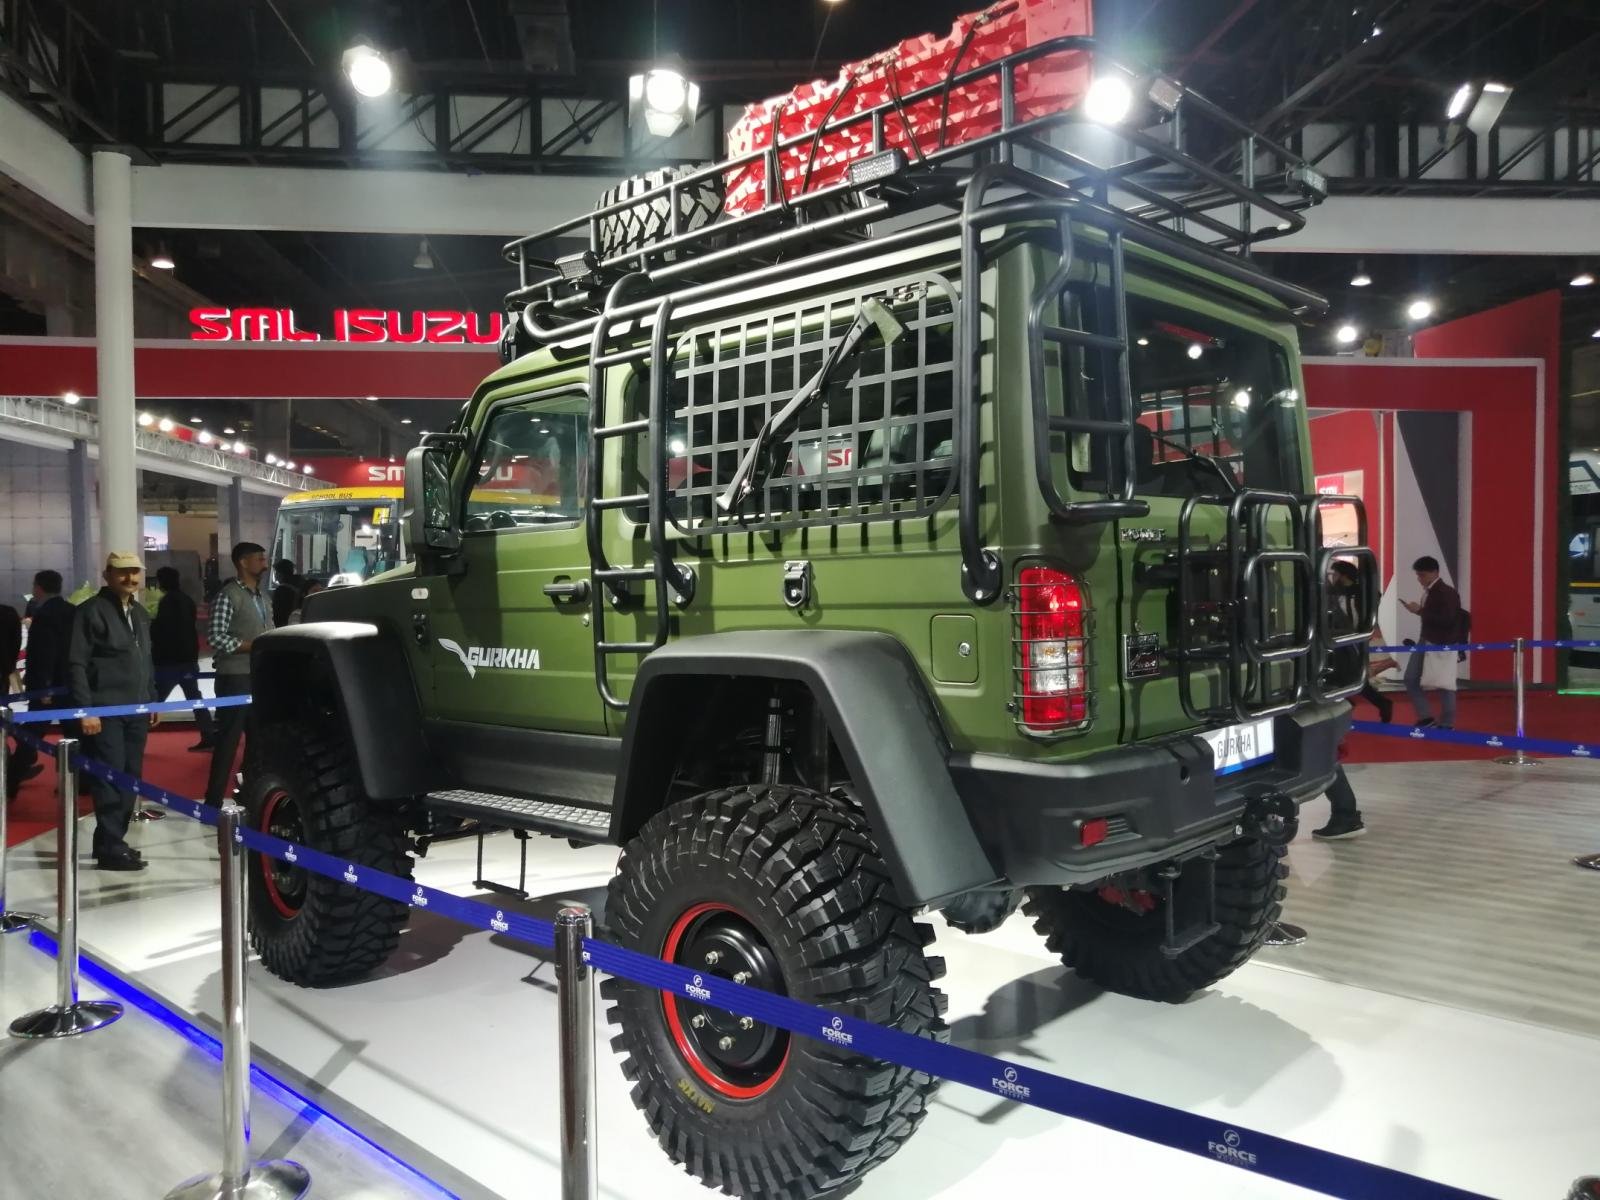 modified Force Gurkha showcased at Auto Expo 2020